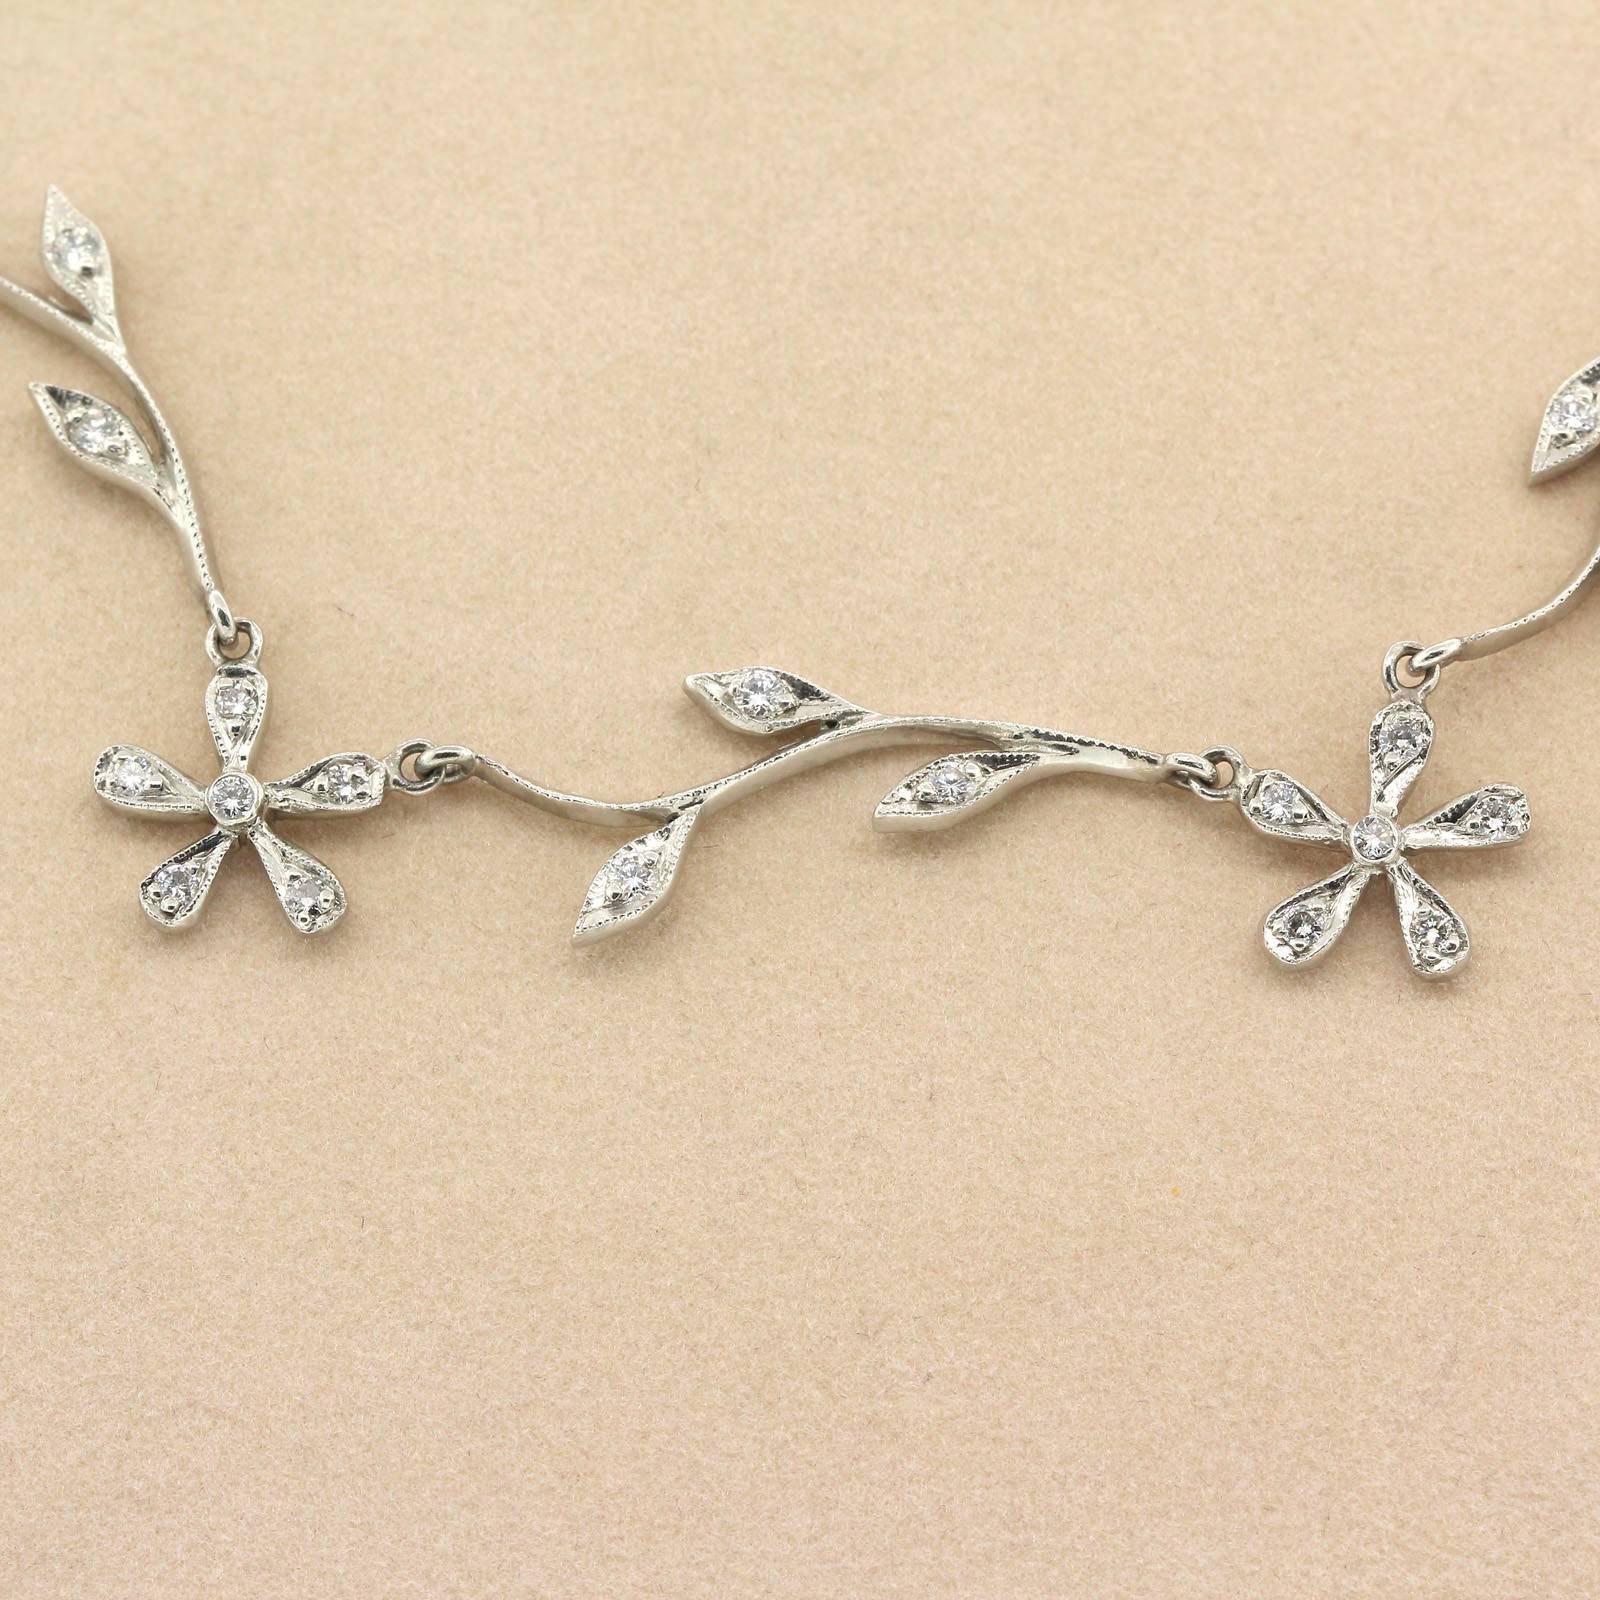 Romantic Cathy Waterman Diamond and Platinum Necklace